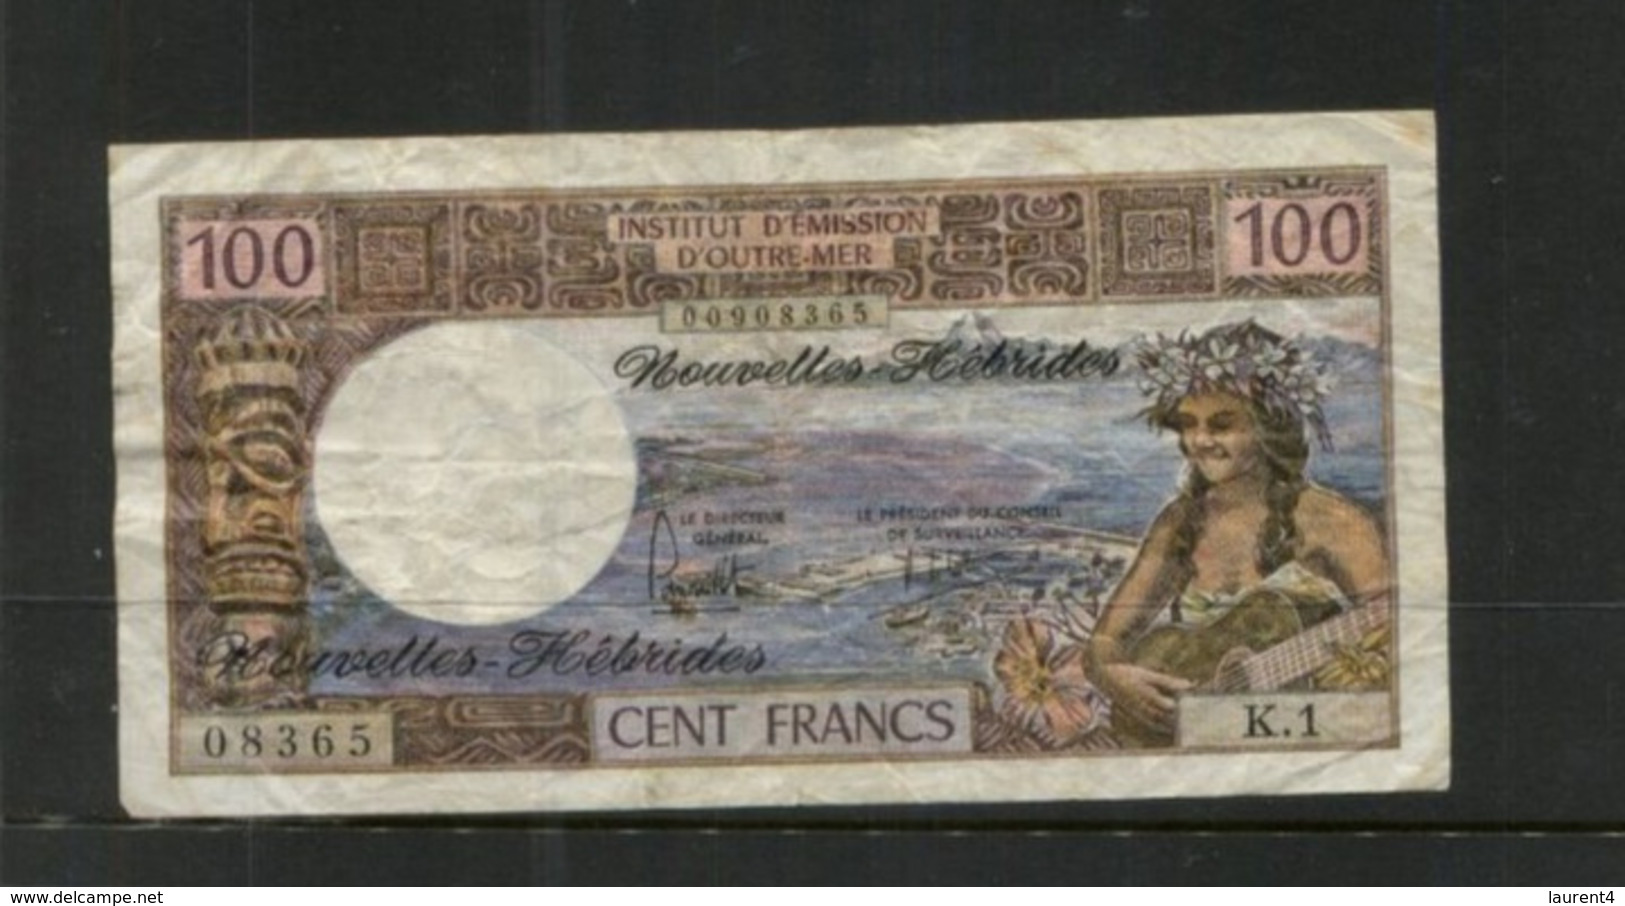 (special Under Stamps) 100 Francs - Banknote / Billet 100 F From Nouvelles Hébrides (08365 K 1) See Front And Back - Autres - Océanie